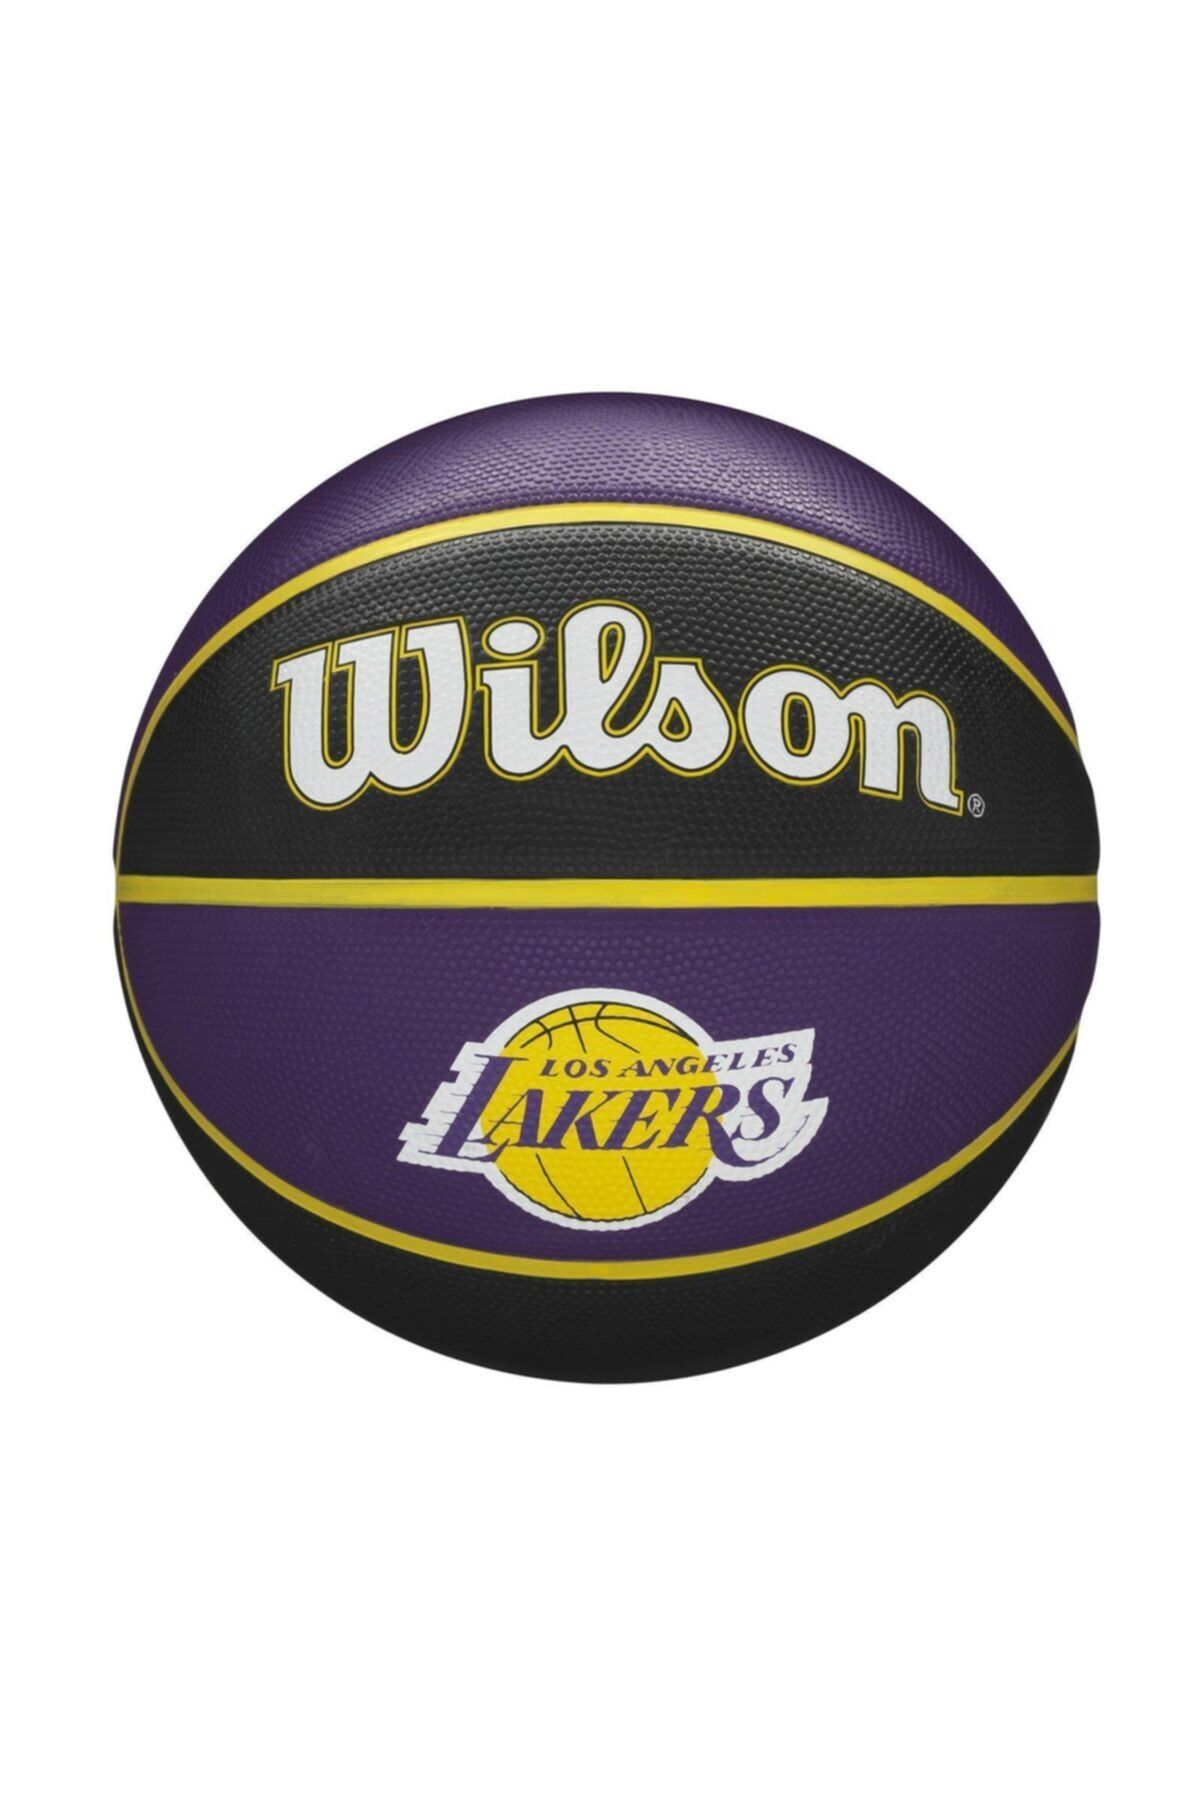 Wilson Basket Topu Nba Team Tribute La Lakers Size 7 (wtb1300xblal)